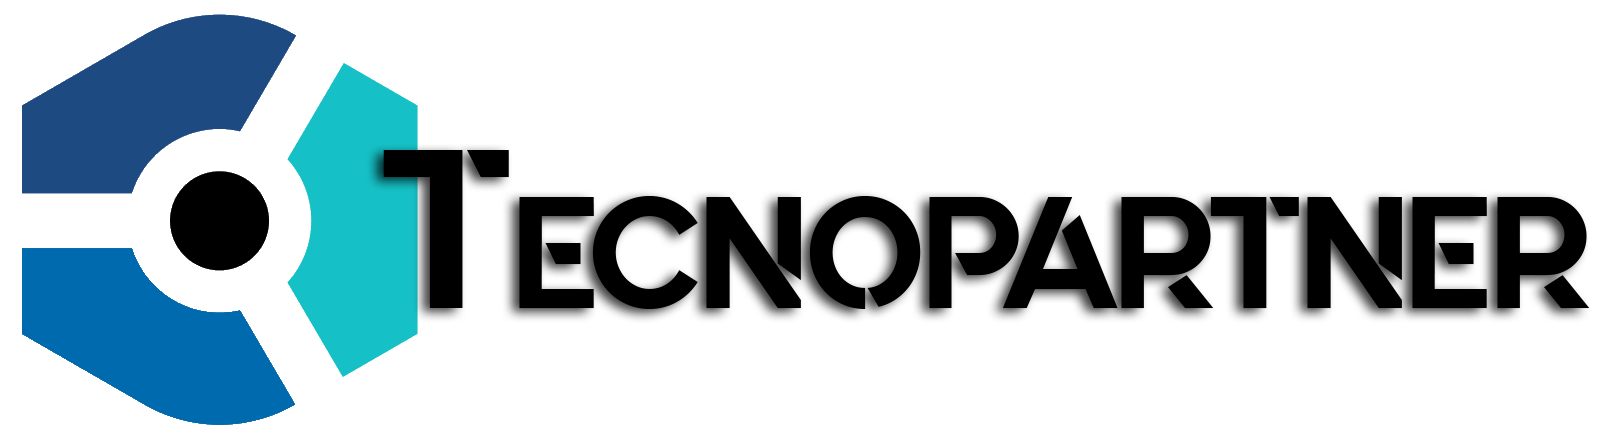 tecnopartner-logo-nero